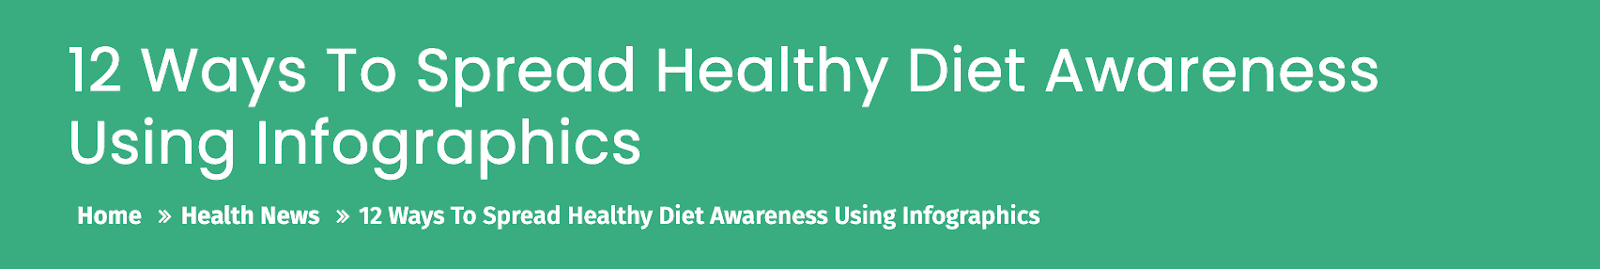 12 ways to spread healthy diet awareness using infographics